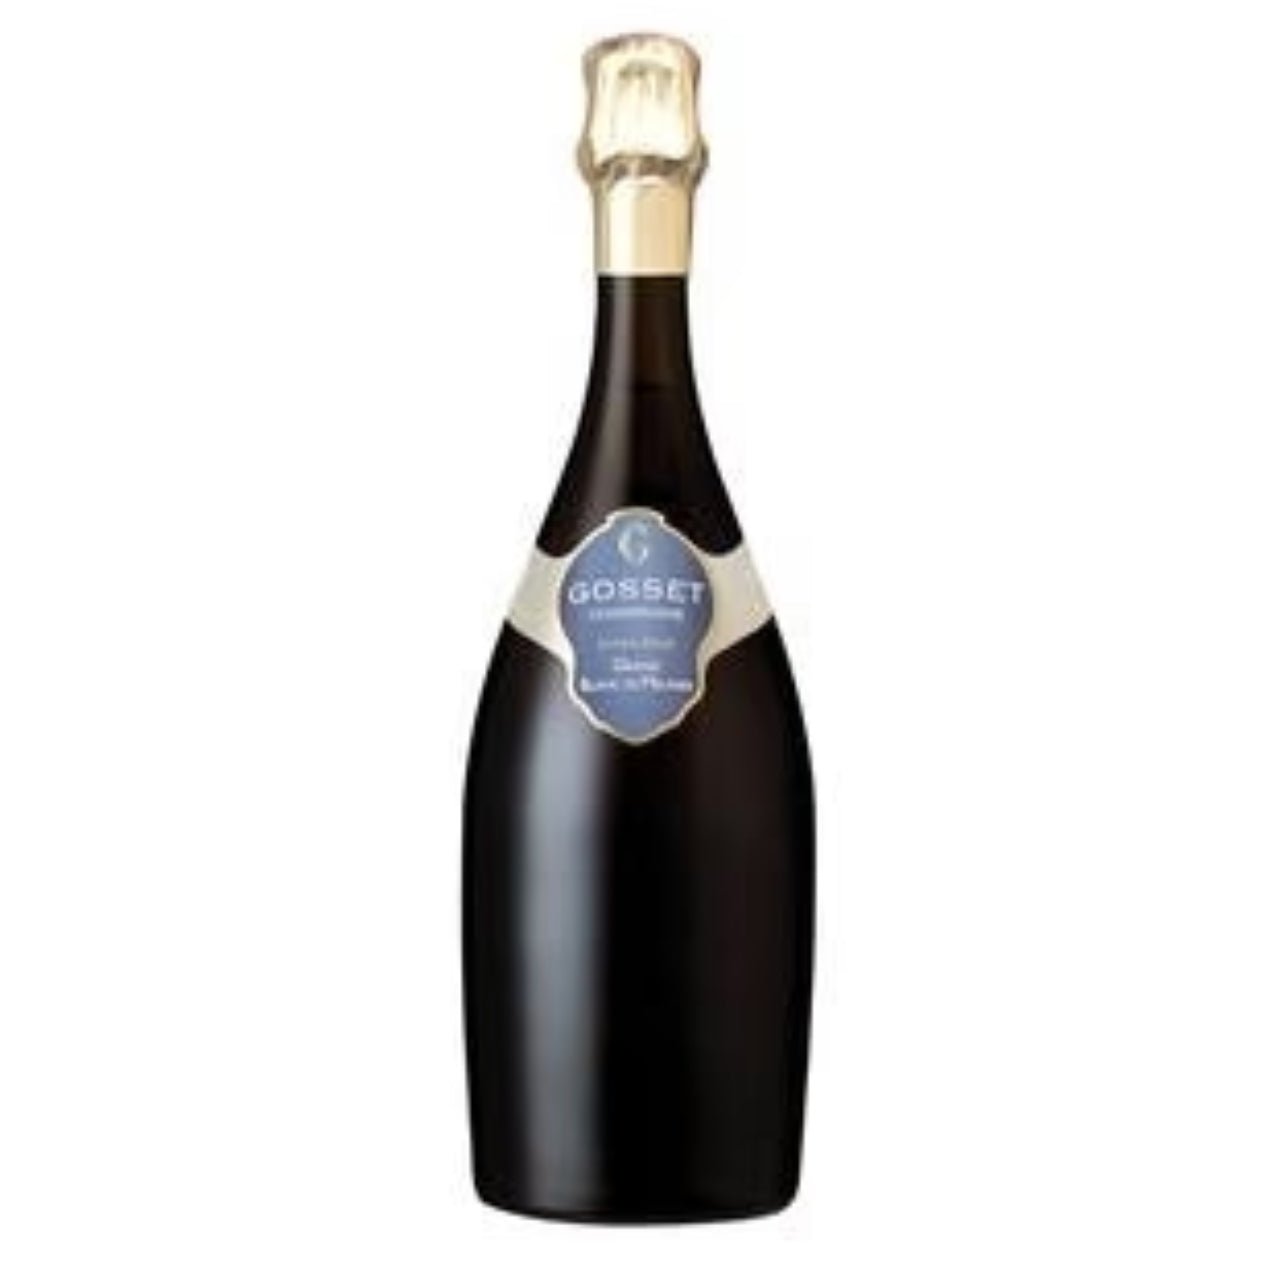 NV Gosset Blanc de Meunier - Wine France Champagne - Liquor Wine Cave